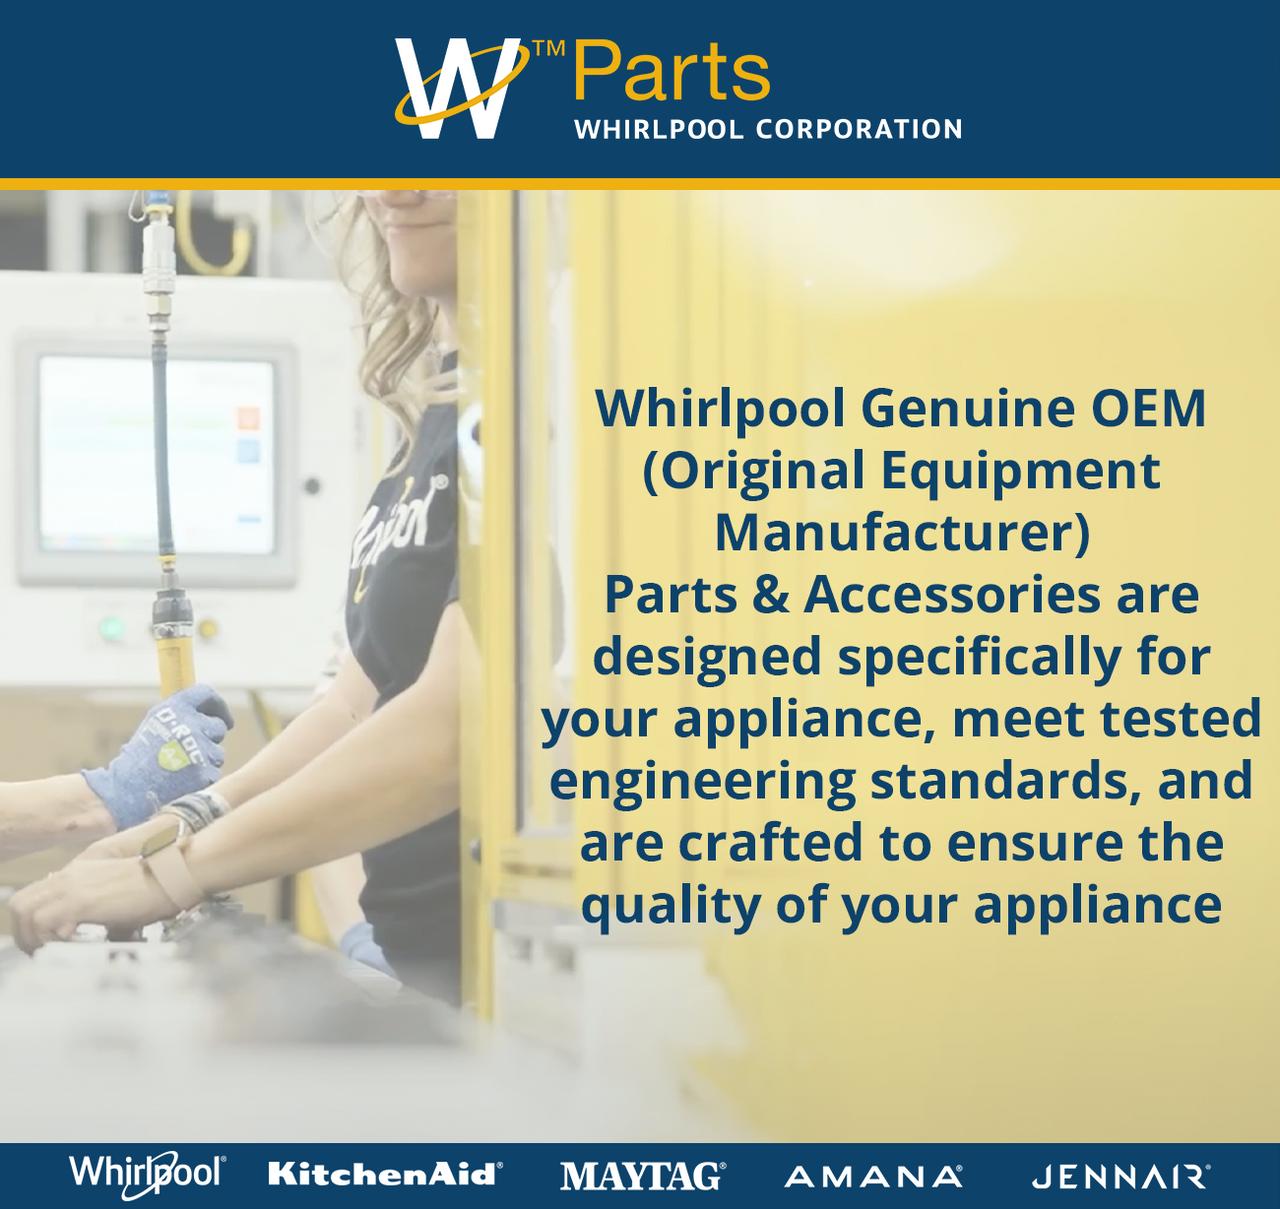 Whirlpool WPW10556710 - Gas Range Electronic Control Board - Whirlpool Genuine Part Badge